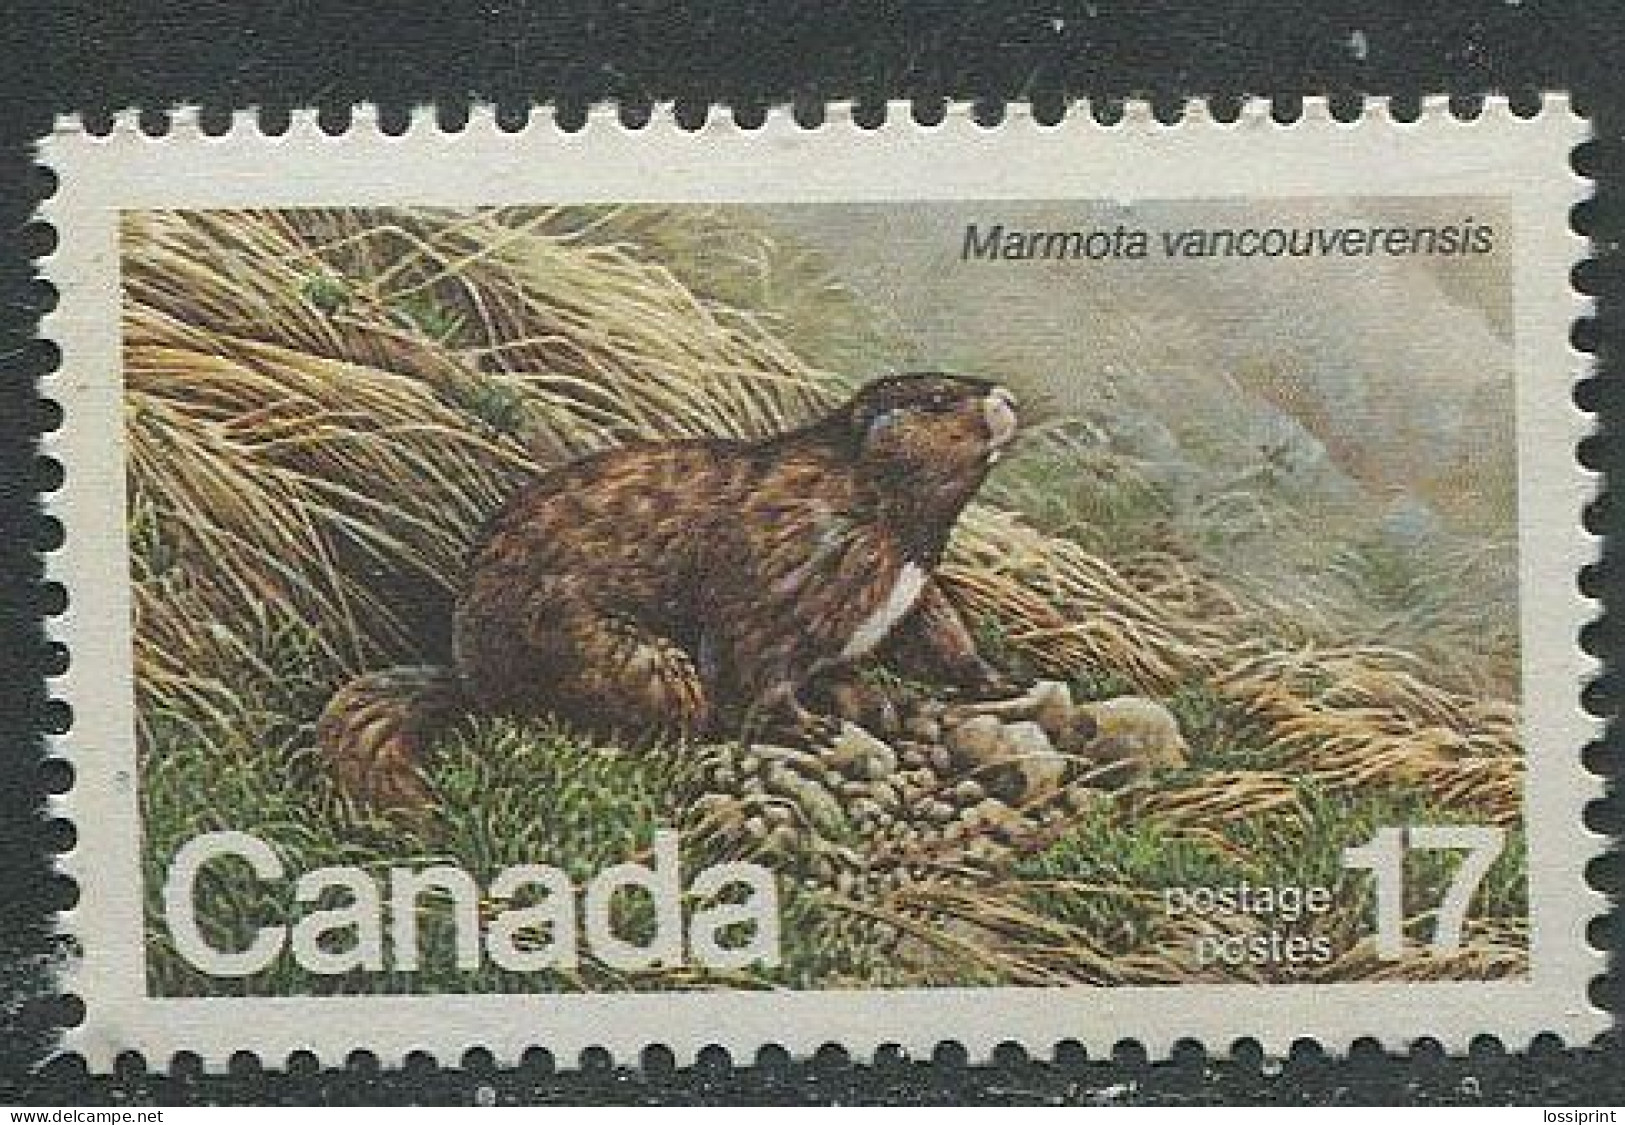 Canada:Unused Stamp Vancouver Island Marmot, 1981, MNH - Roditori